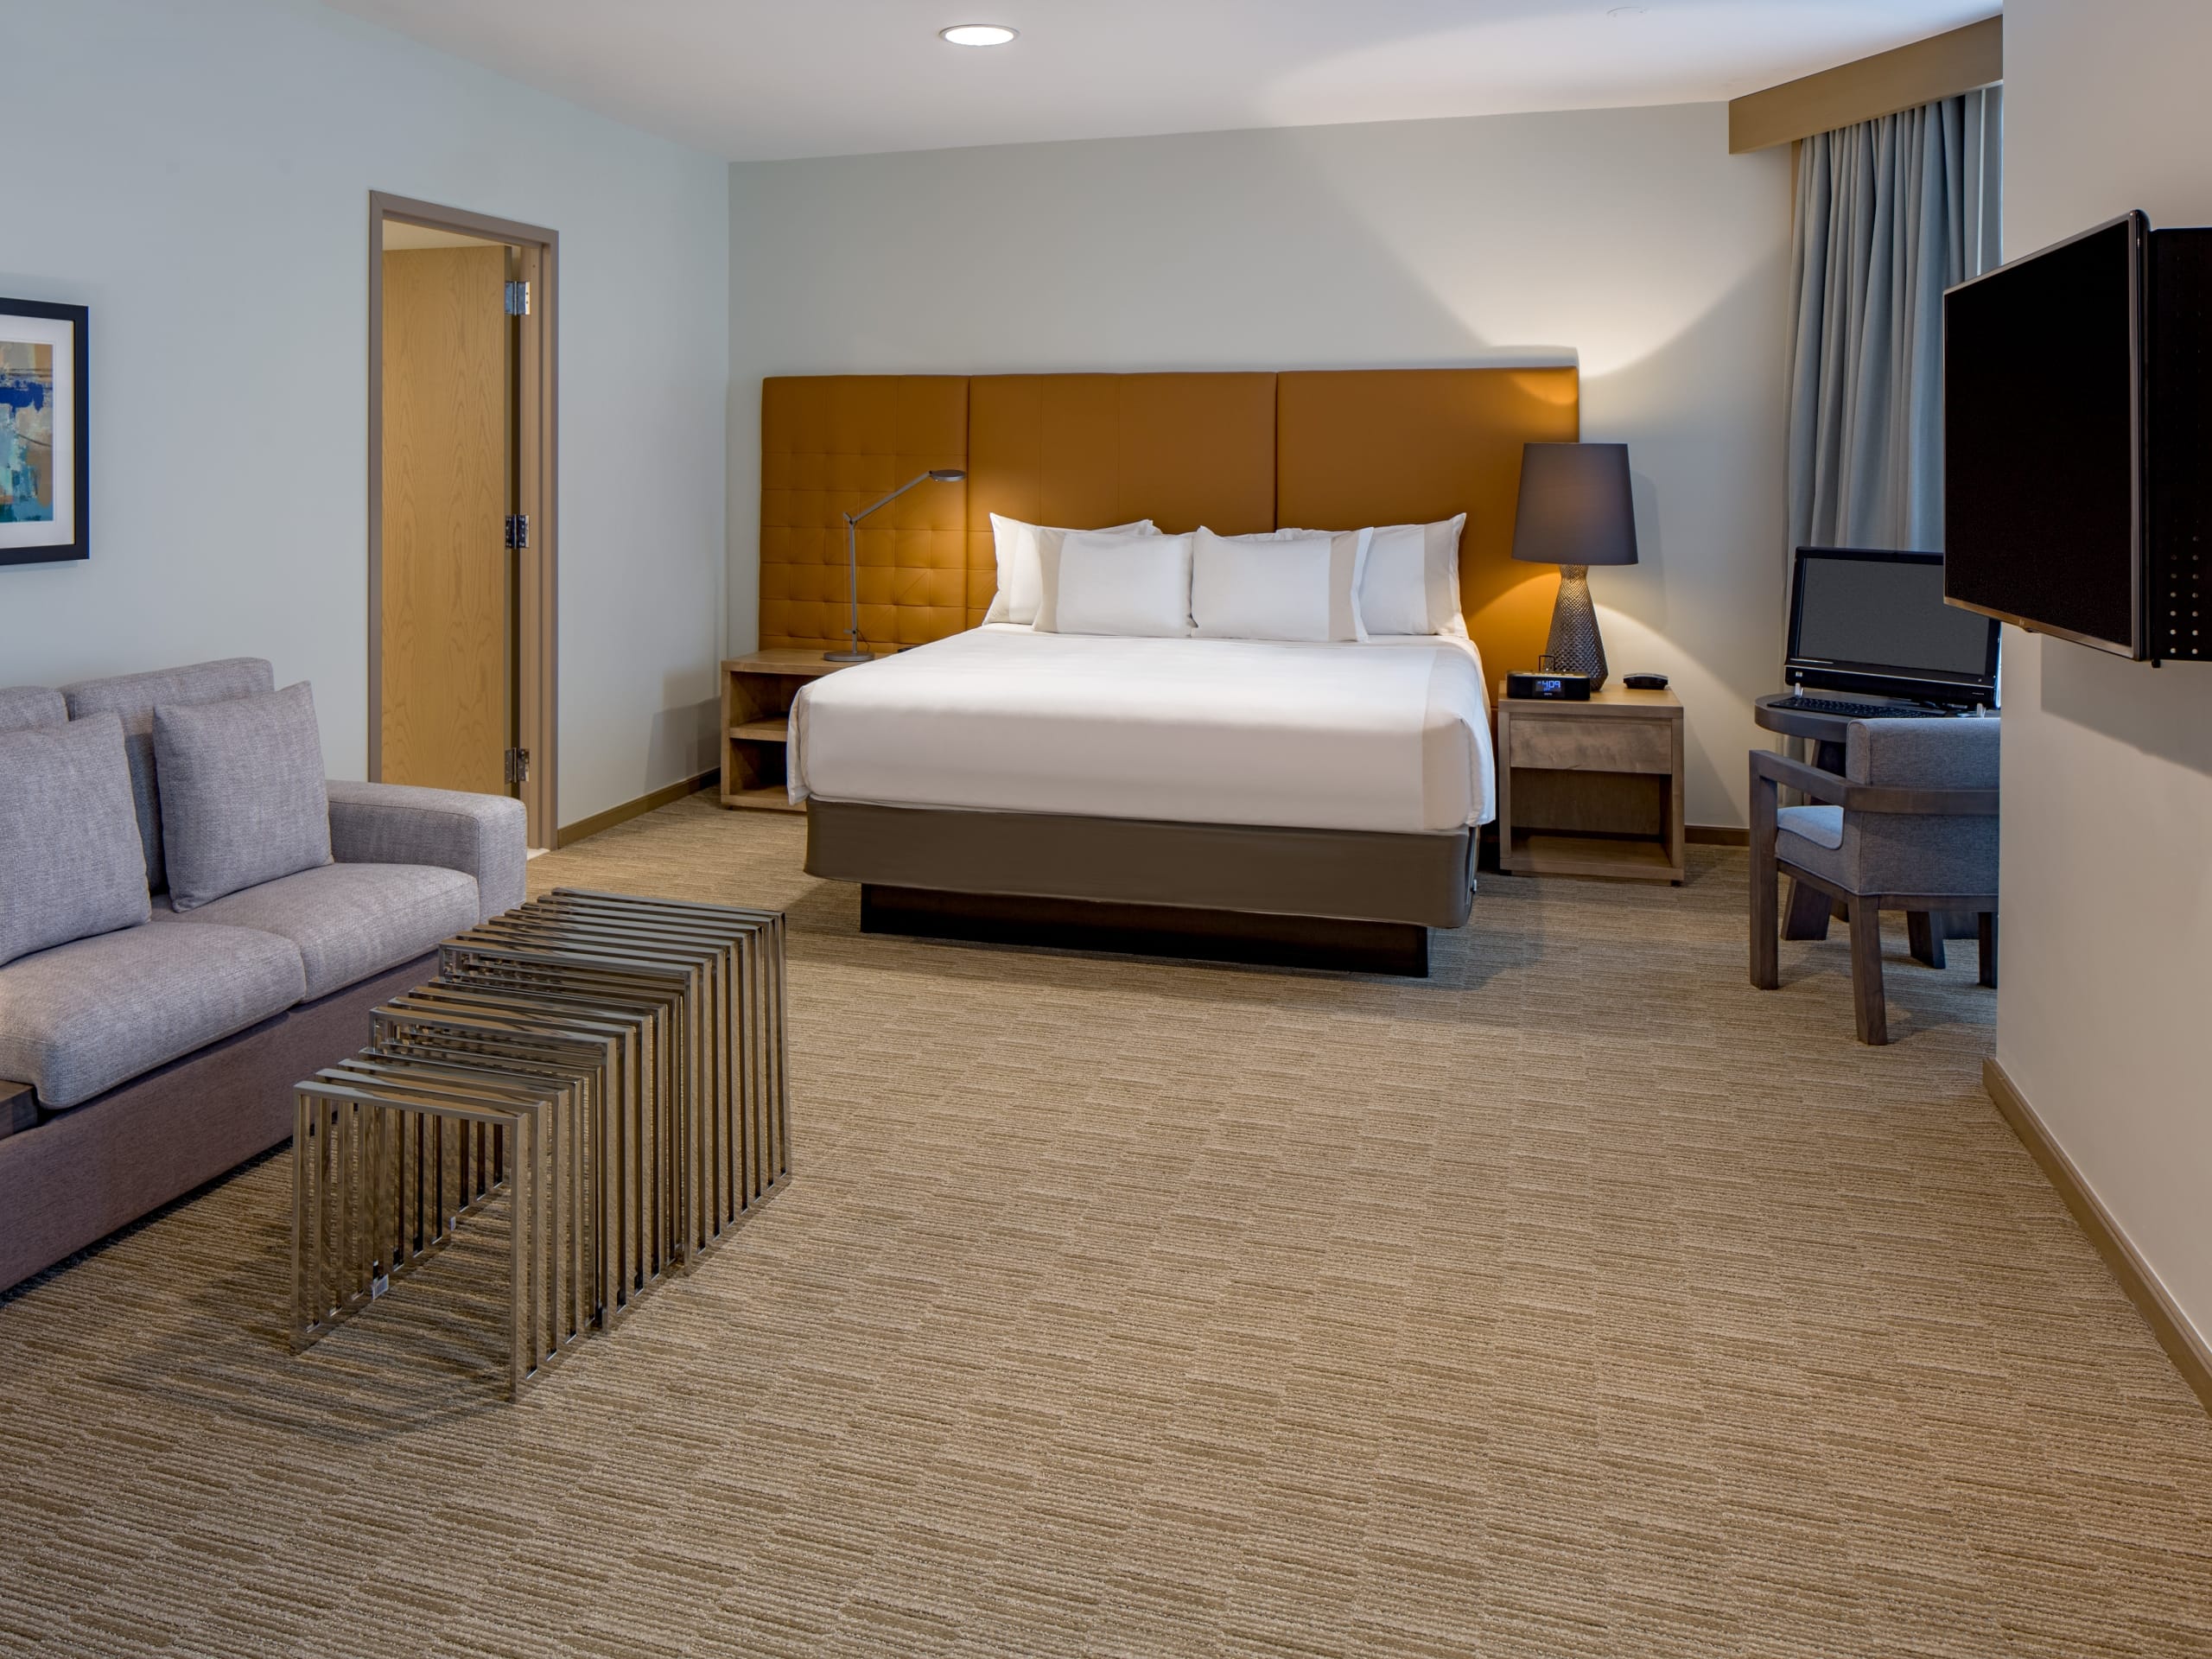 Hyatt Regency Houston spacious suite with large comfy bed